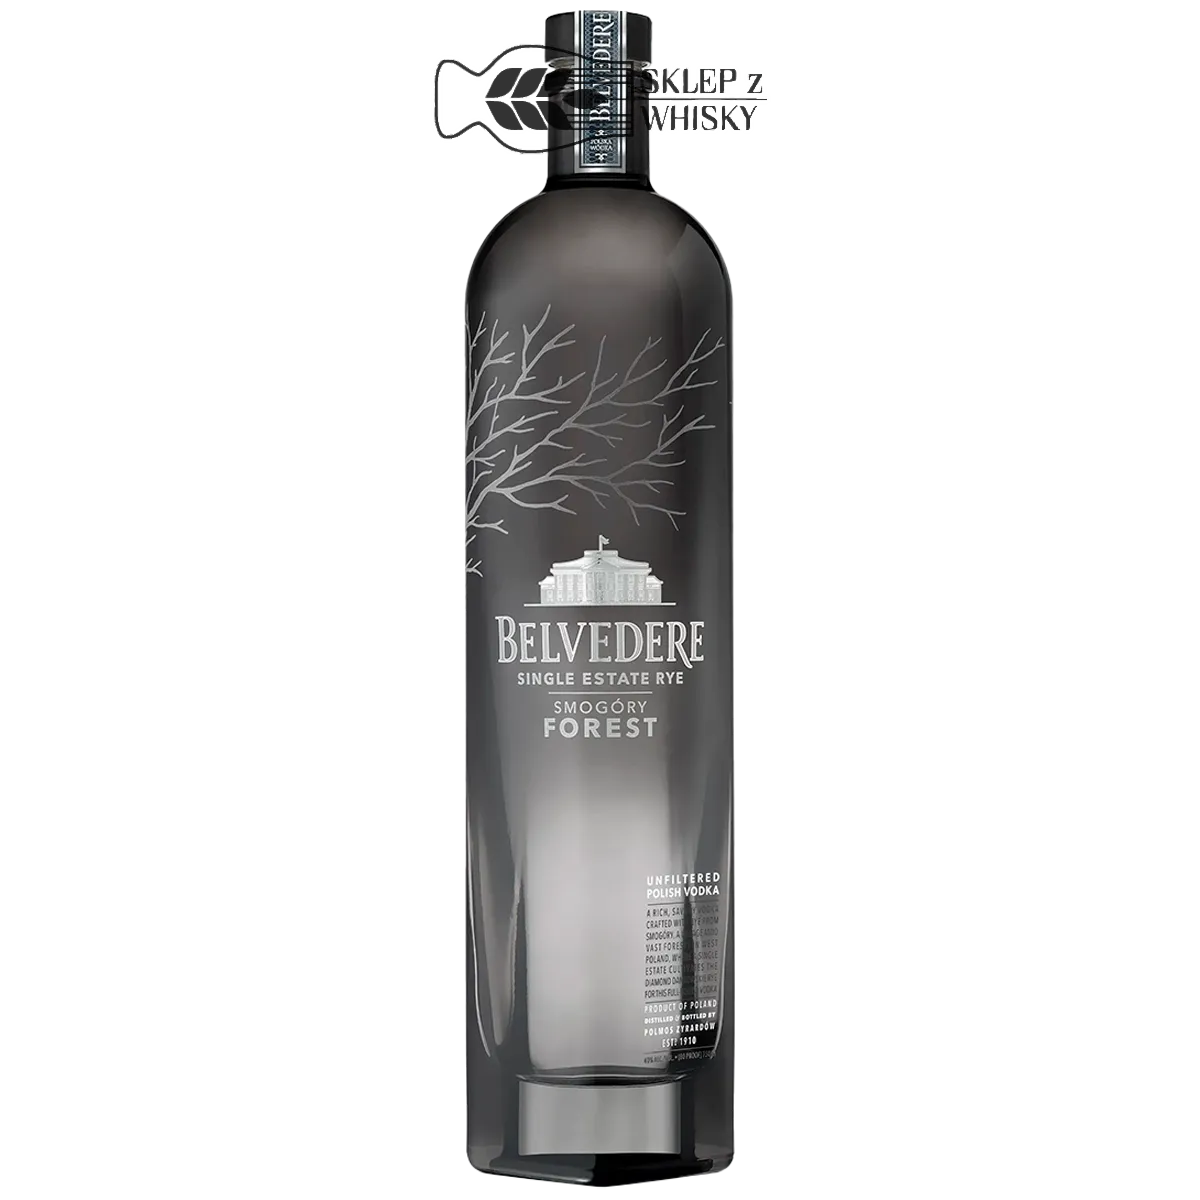 Belvedere Vodka Smogóry Forest Single Estate — Polska Wódka żytnia, butelka 700 ml